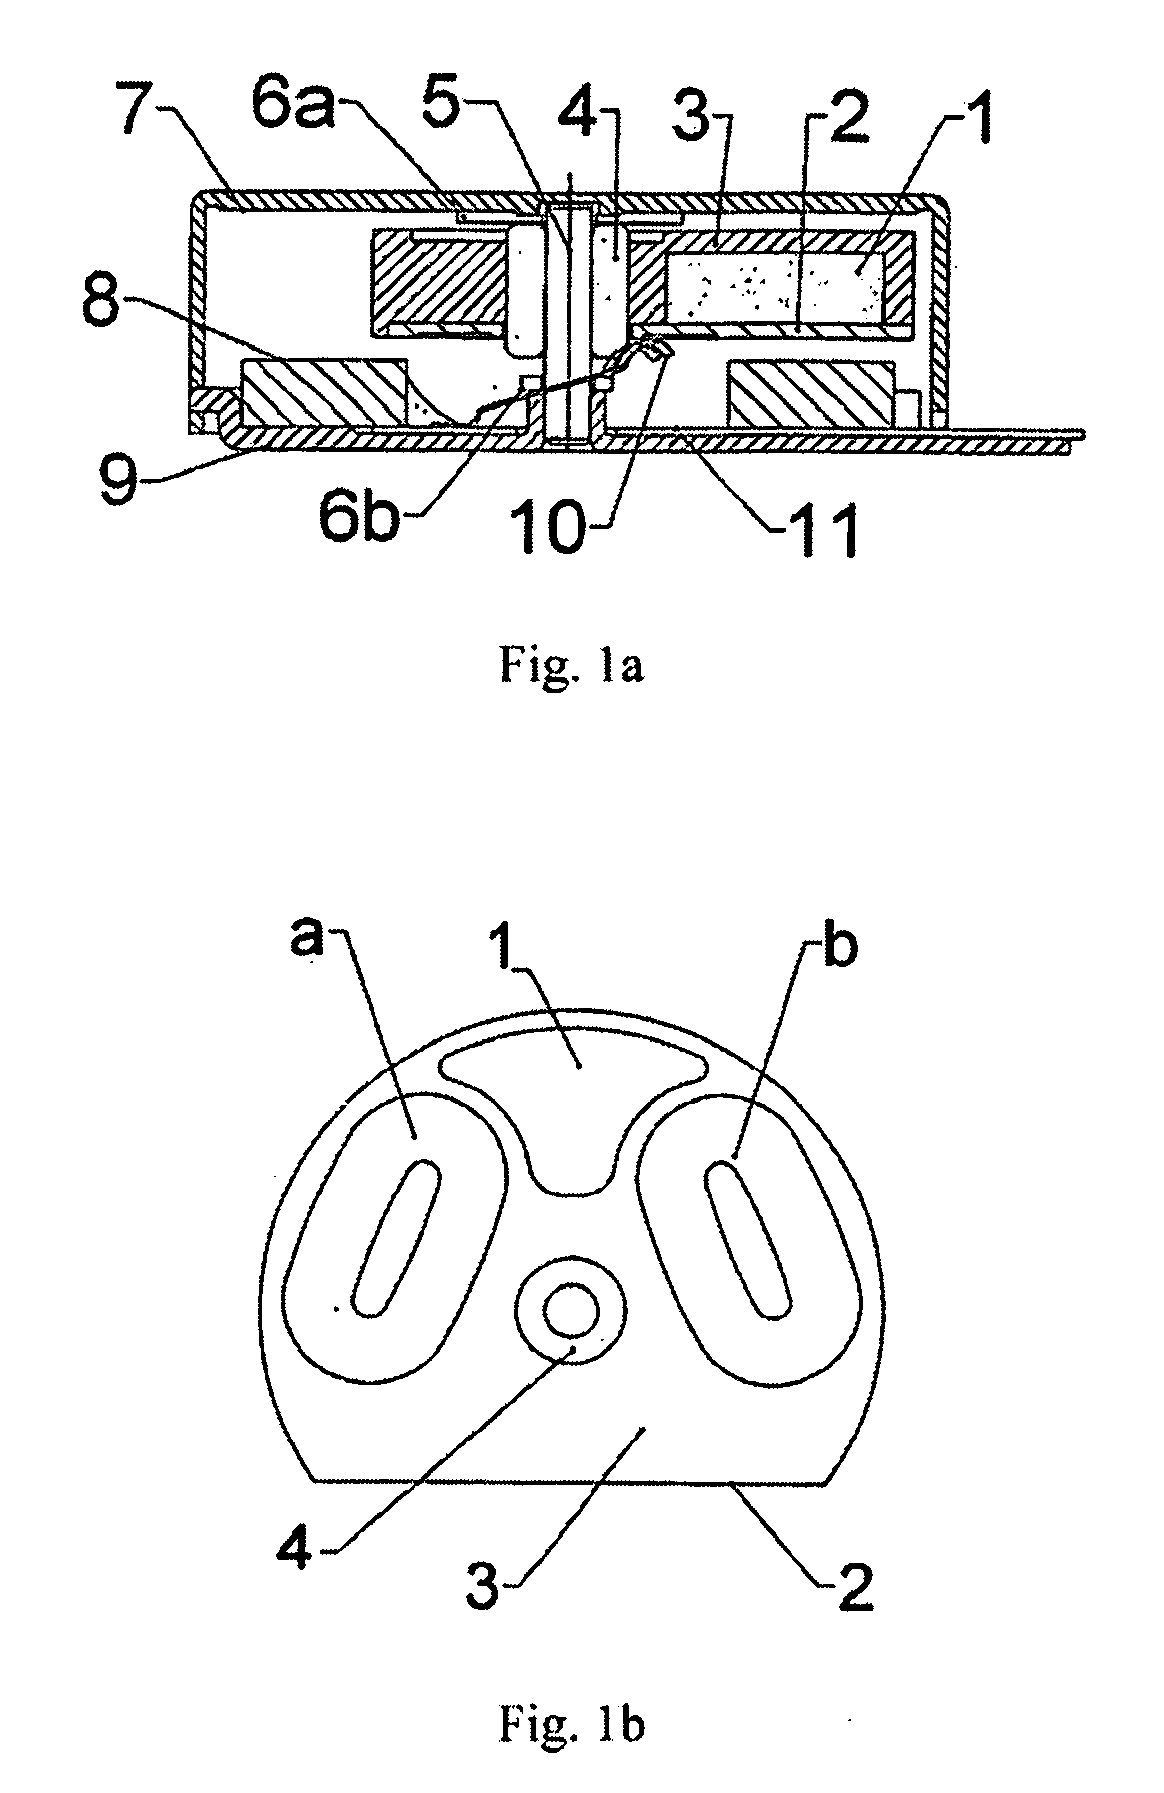 Flat type vibration motor with increased vibration amount